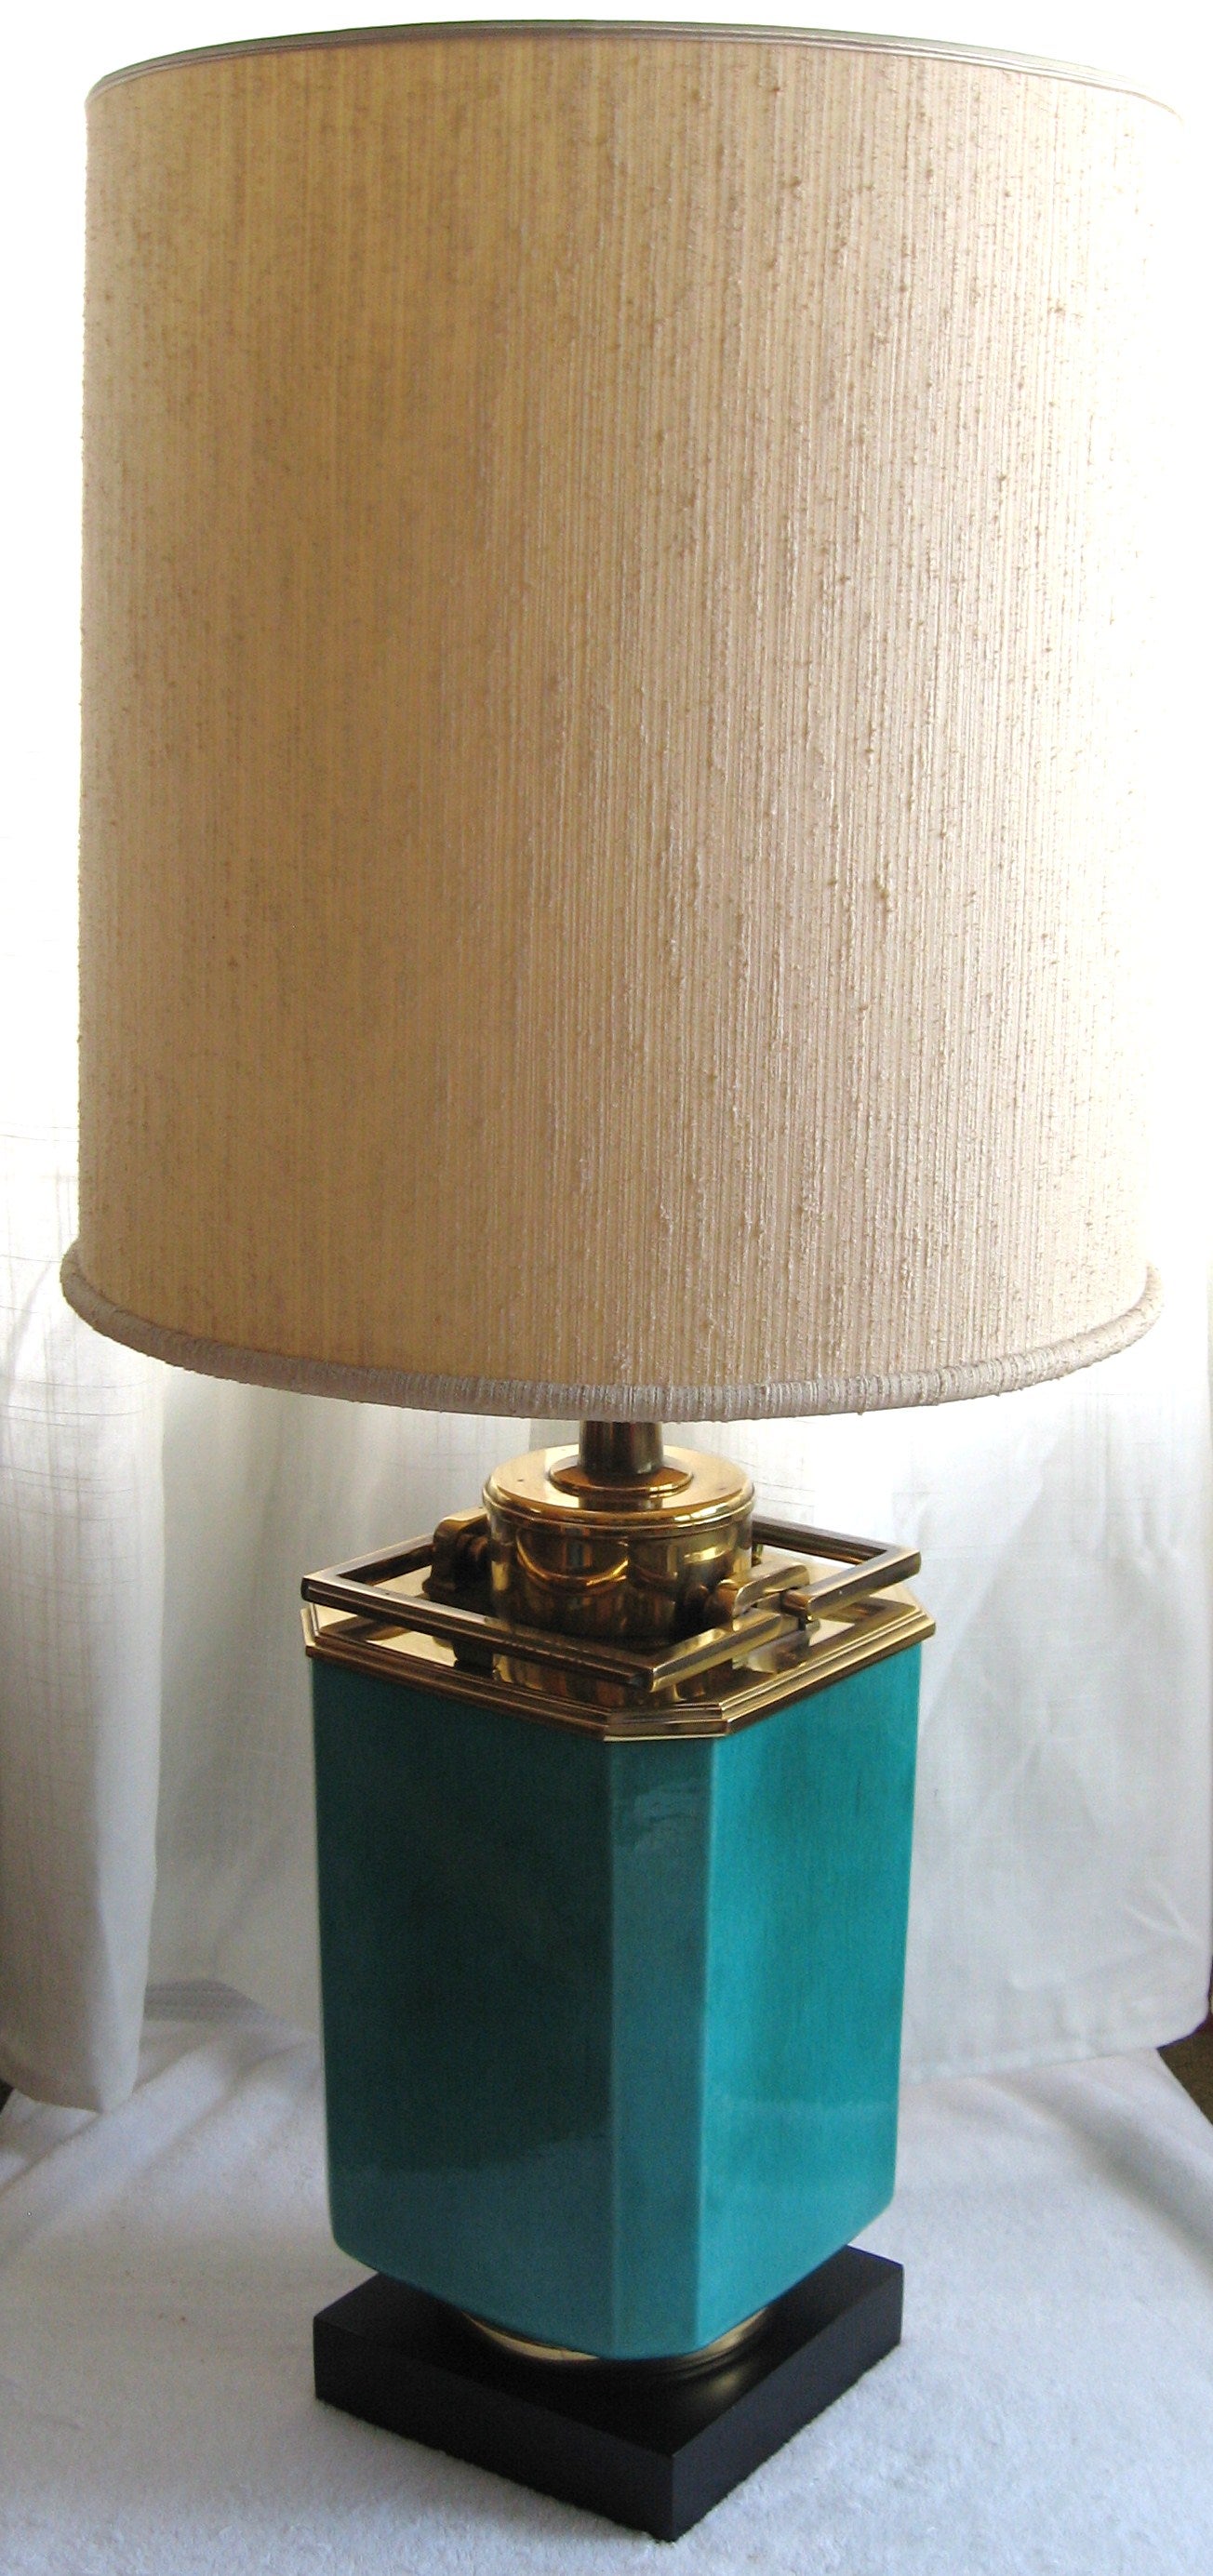 Hollywood Regency Style Stiffel Asian Form Table Lamp